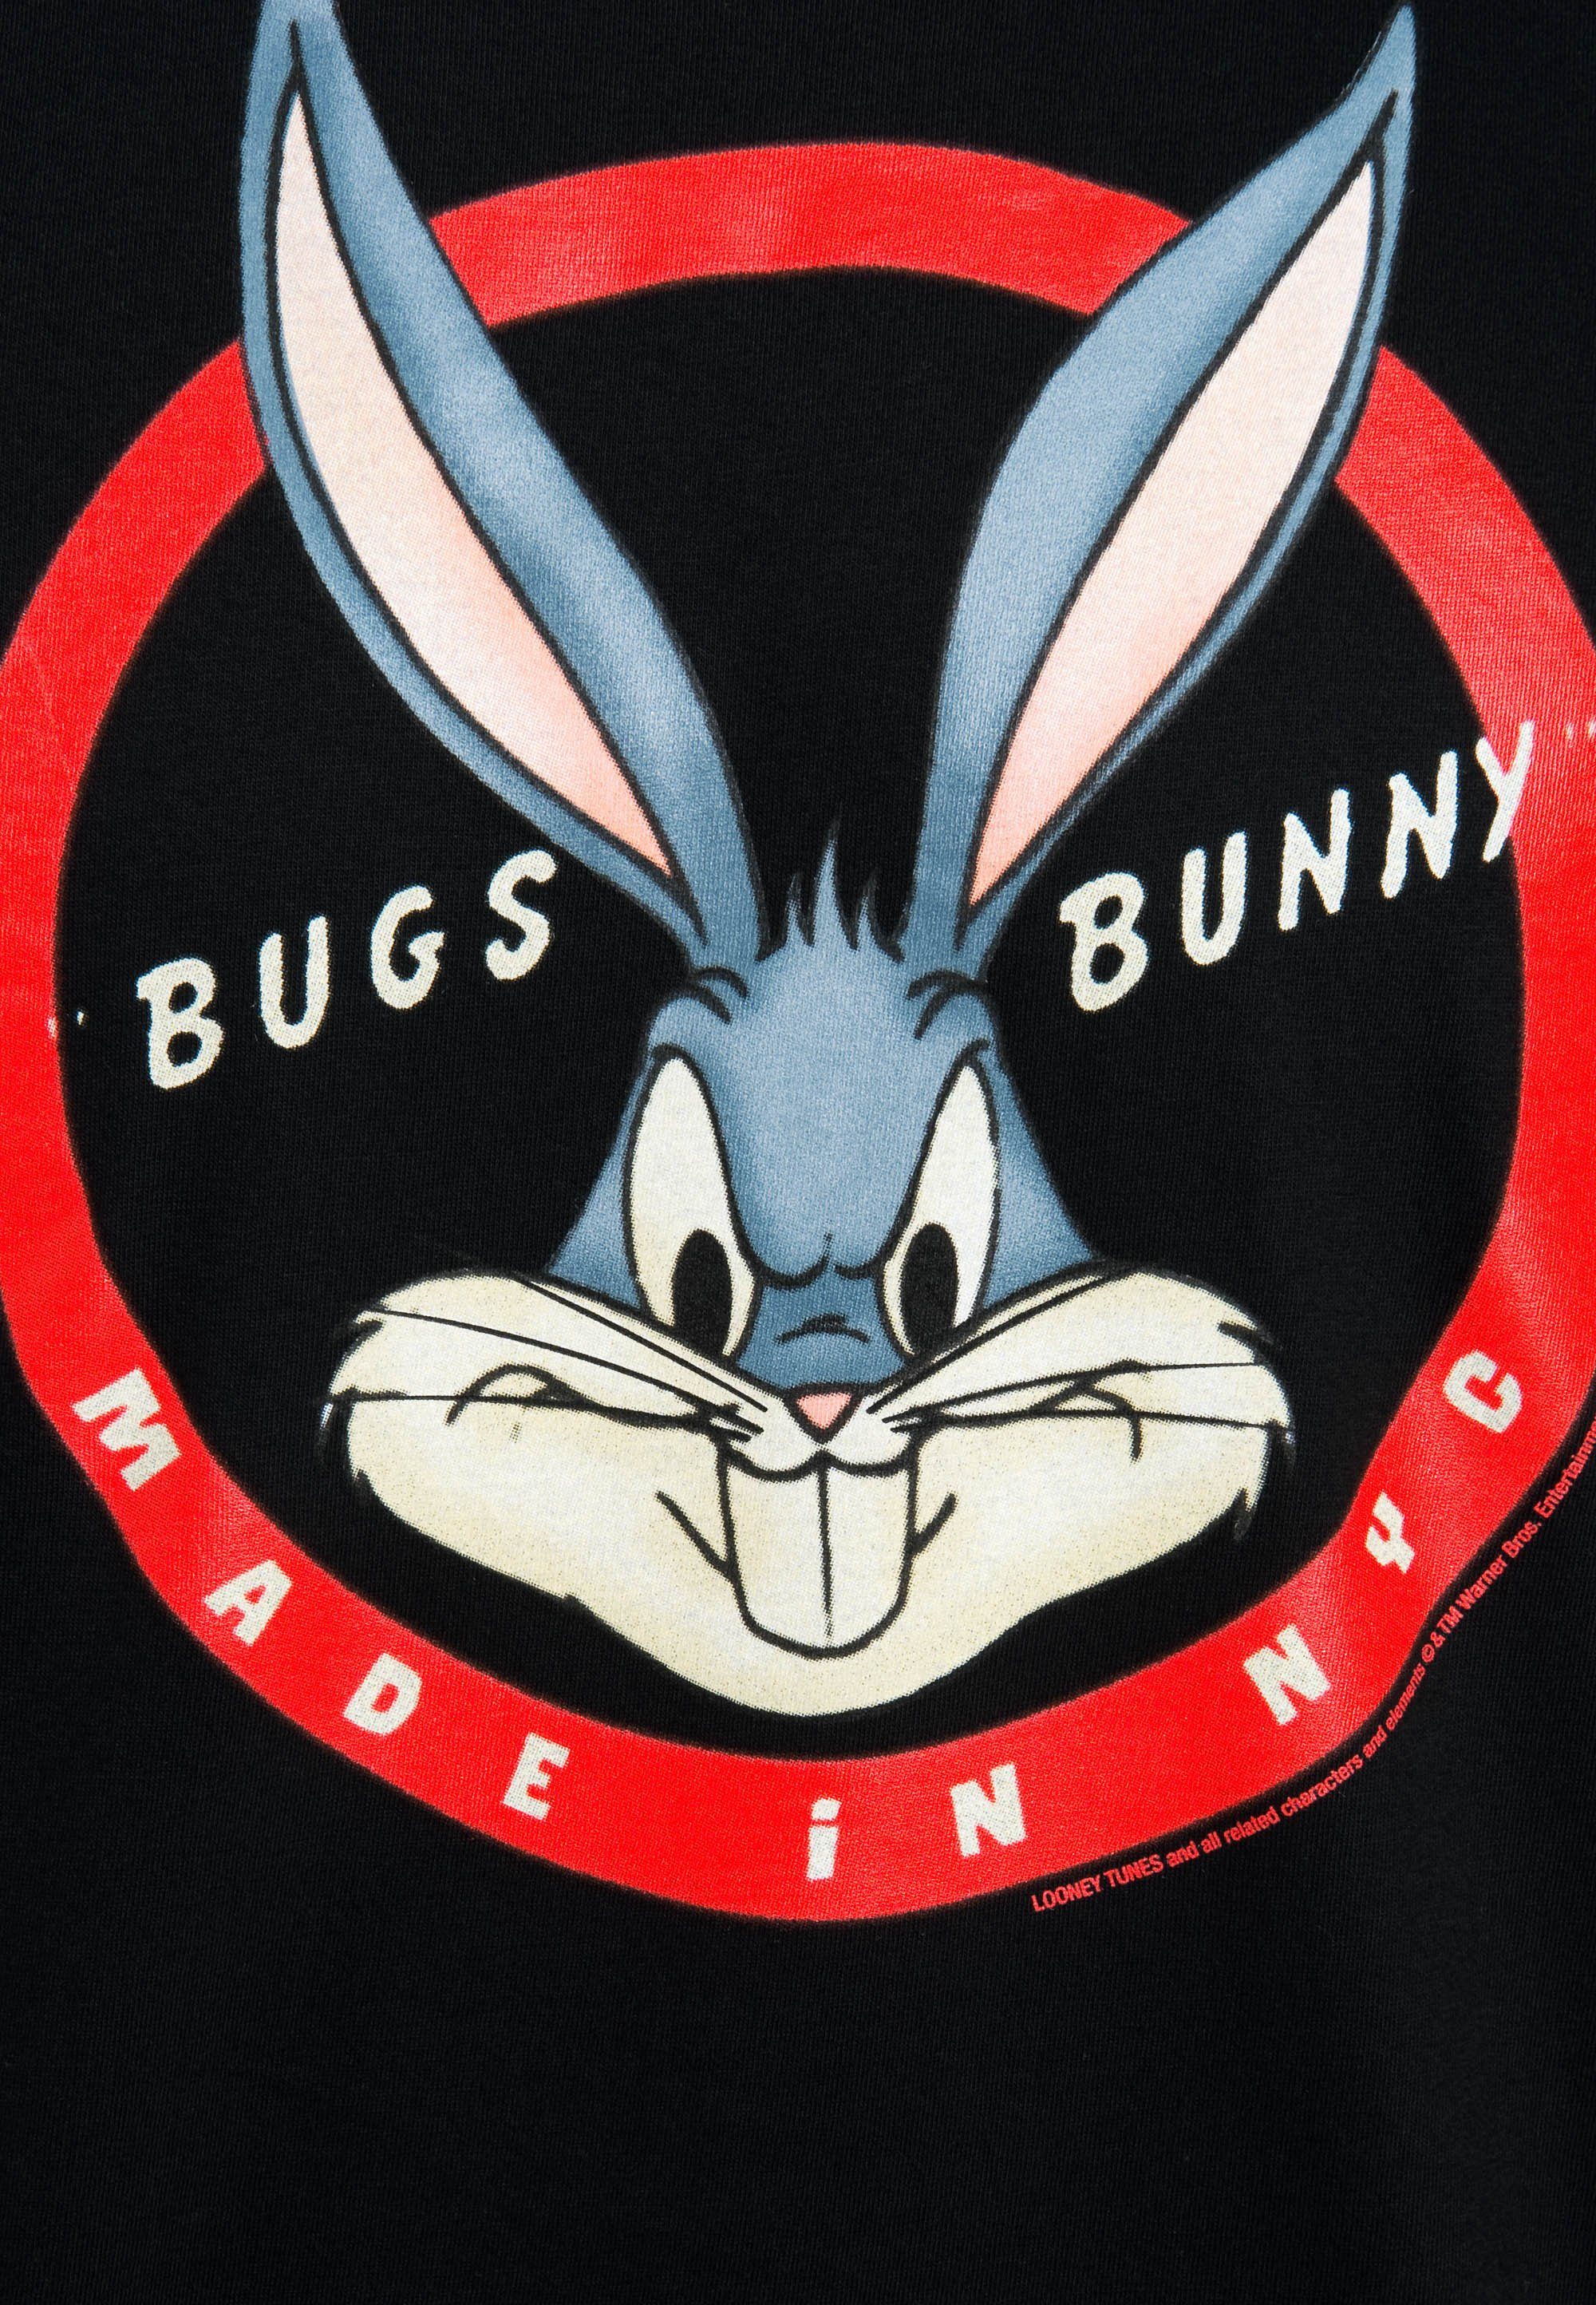 LOGOSHIRT T-Shirt Bunny-Print Bugs Bugs NYC In Bunny Made tollem mit